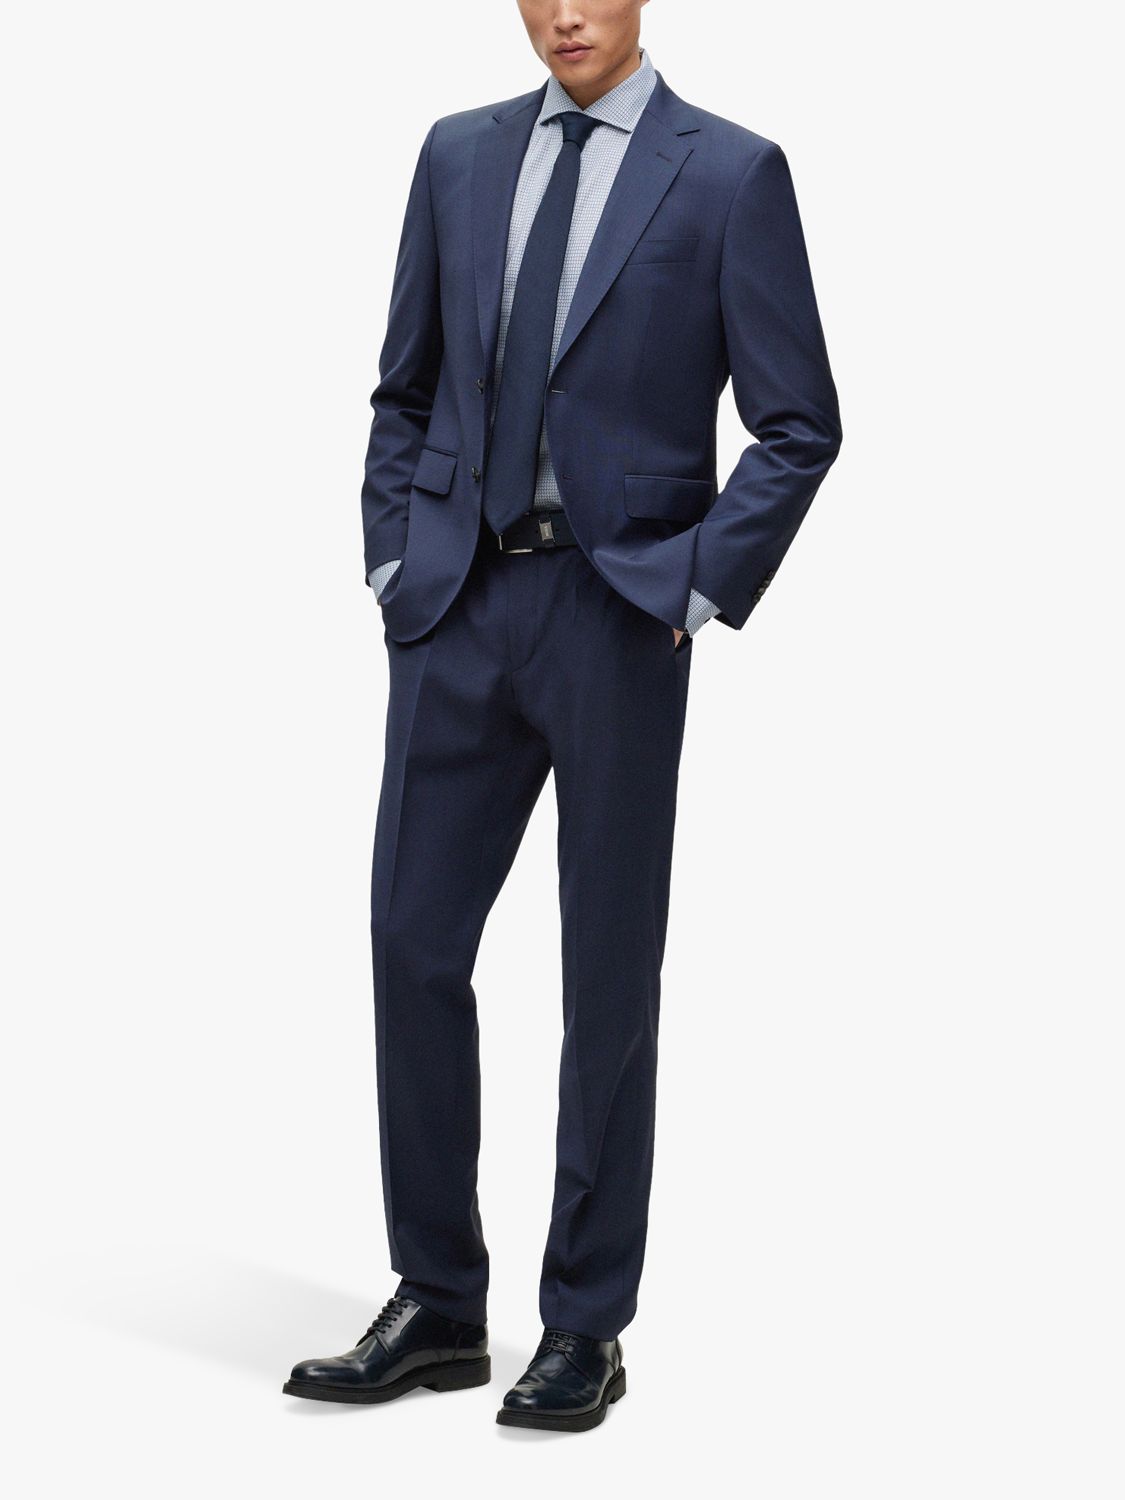 BOSS H-Jeckson Regular Fit Suit Jacket, Dark Blue, 36